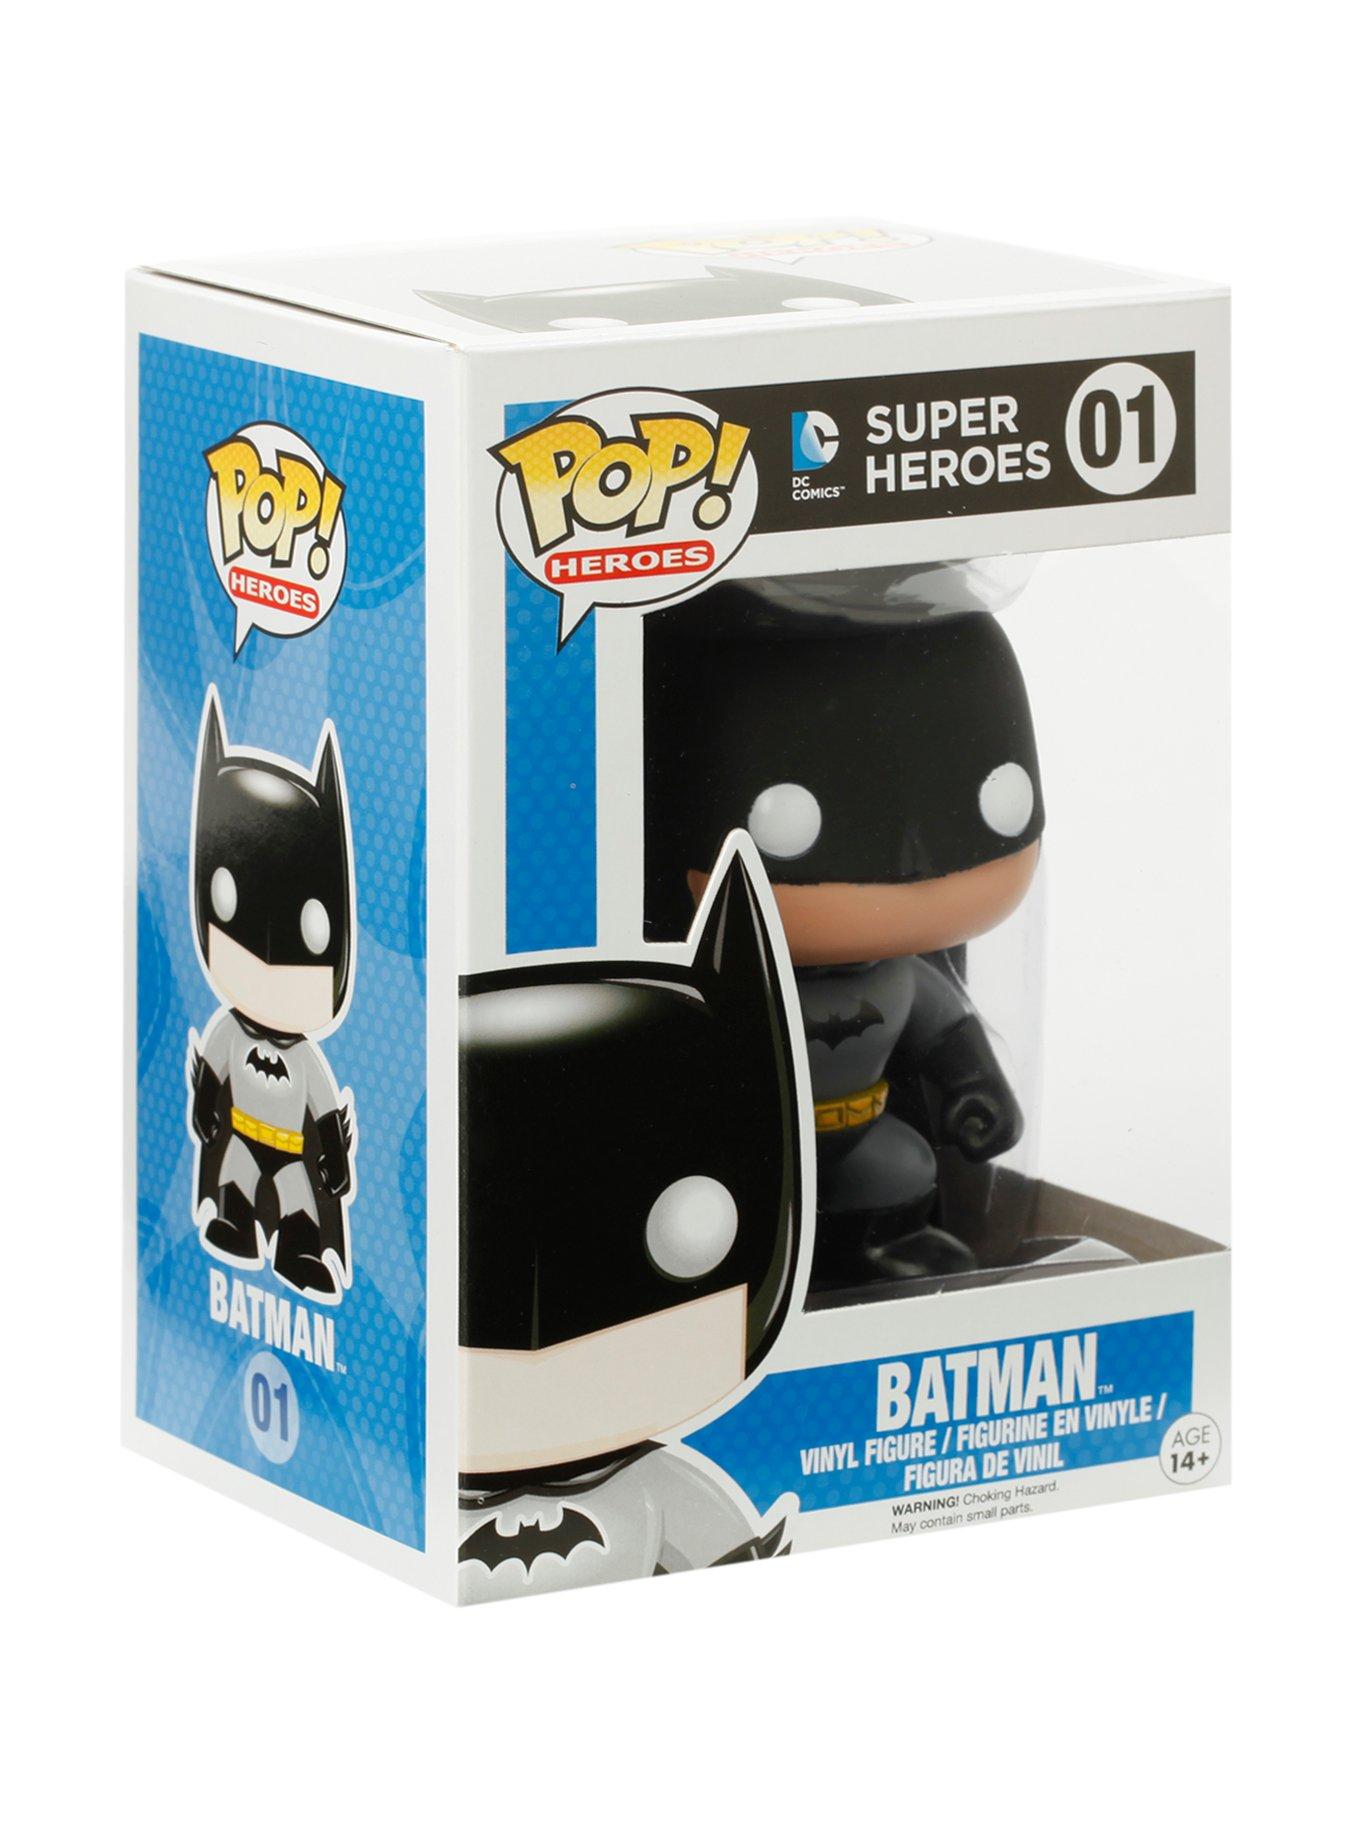 Figurine Batman / Super Heroes / Funko Pop Heroes 01